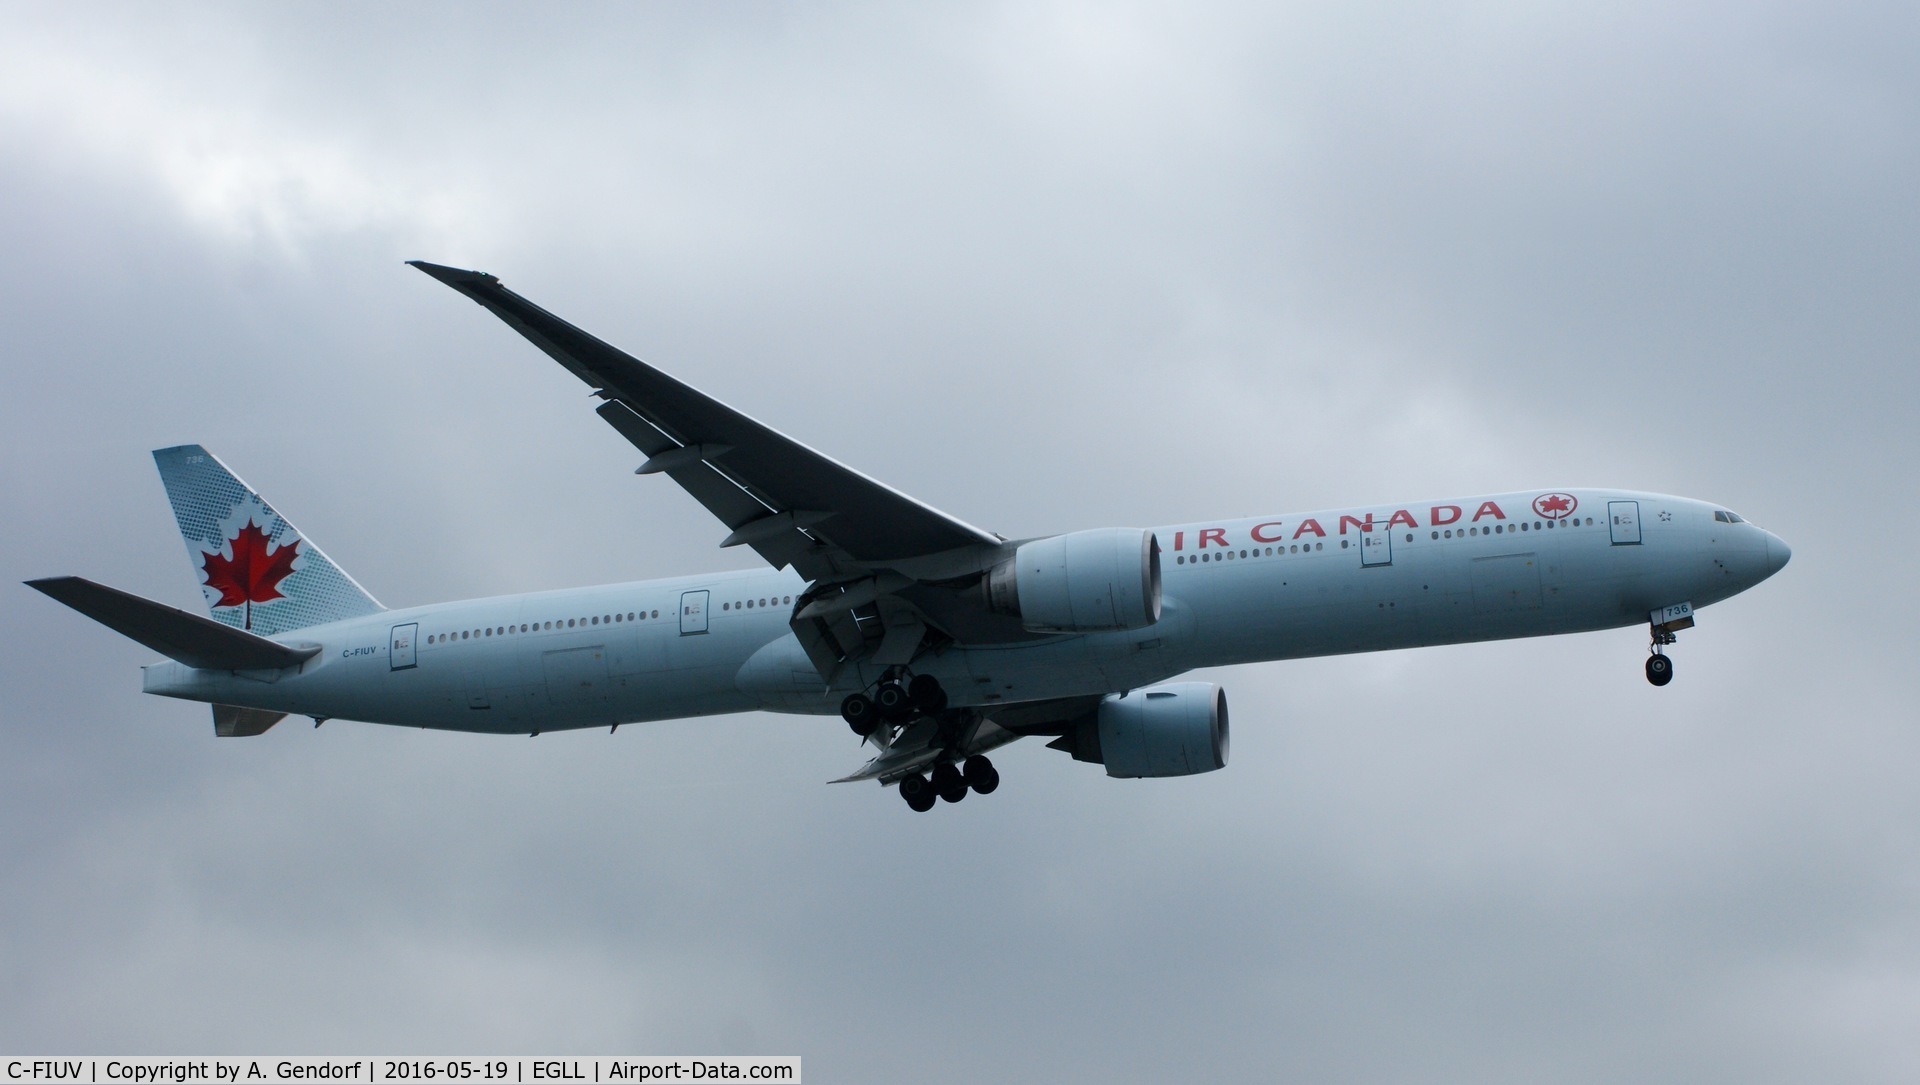 C-FIUV, 2008 Boeing 777-333/ER C/N 35248, Air Canada, is here landing at London Heathrow(EGLL)